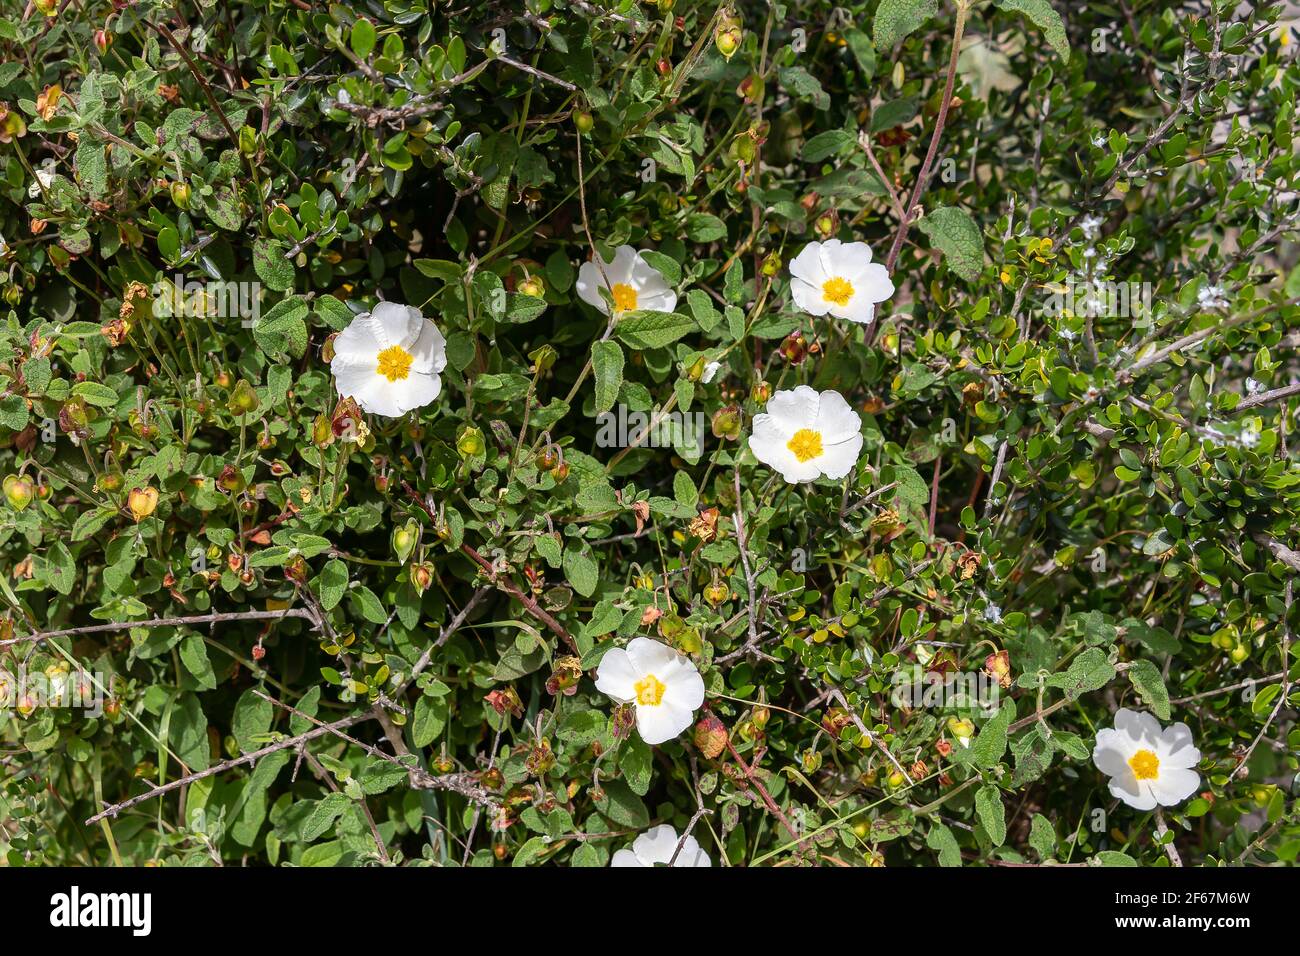 Cistus salviifolius, common names sage-leaved rock-rose, salvia cistus or Gallipoli rose, is a shrub of the family Cistaceae. Stock Photo